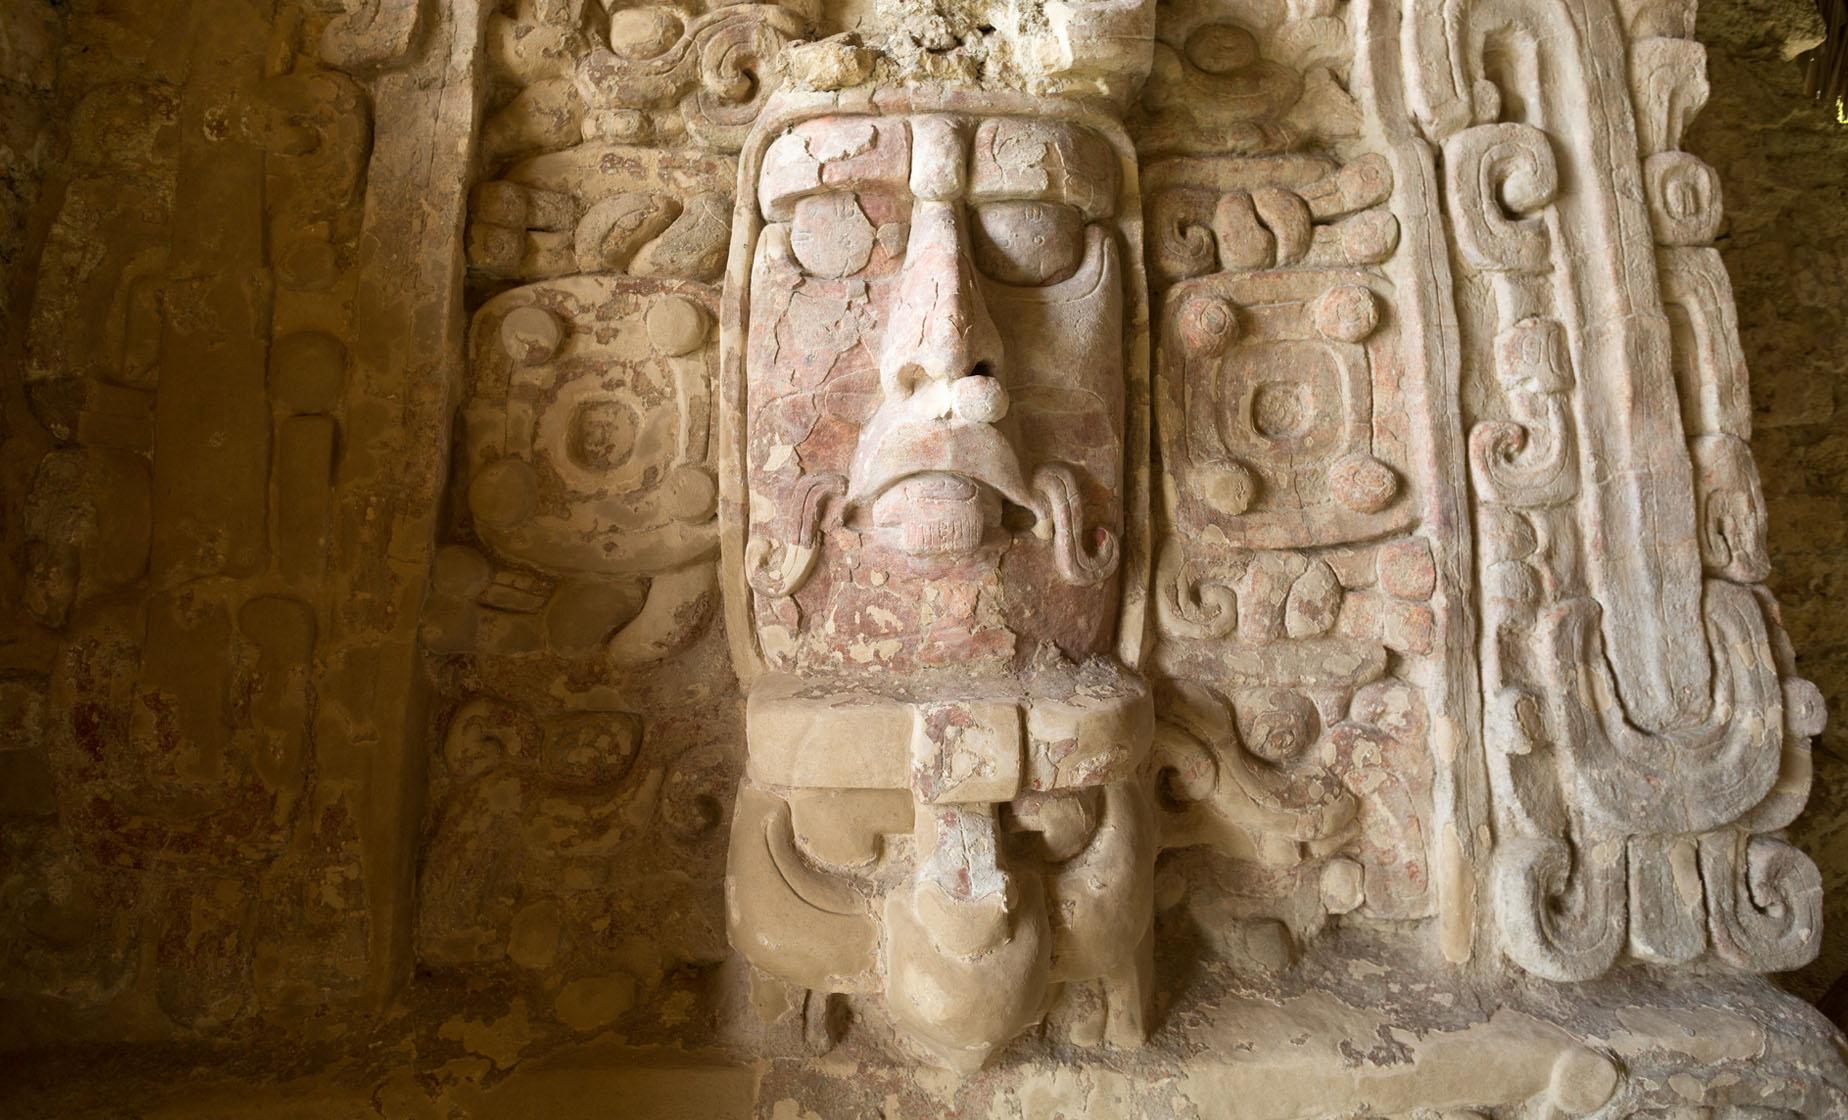 Kohunlich Mayan Ruins and Rainforest Tour History in Costa Maya